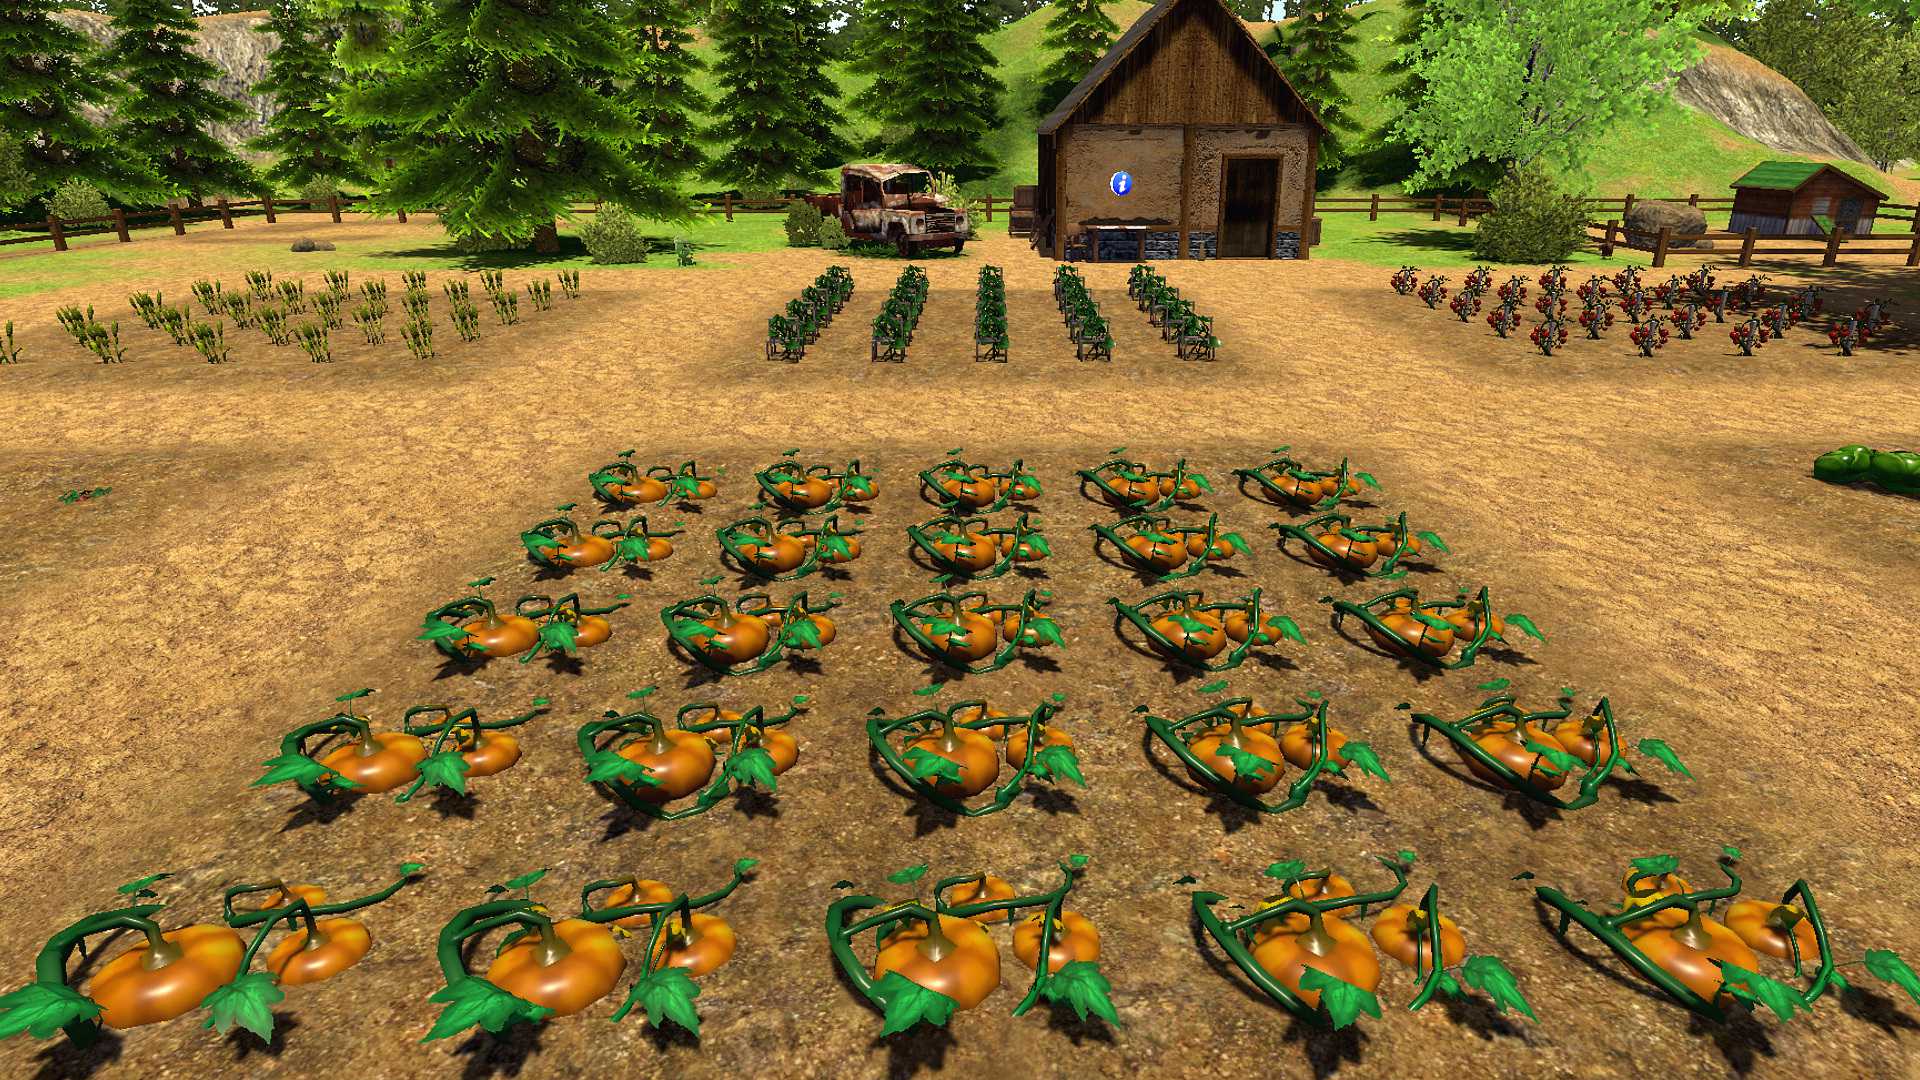 Harvest Simulator VR